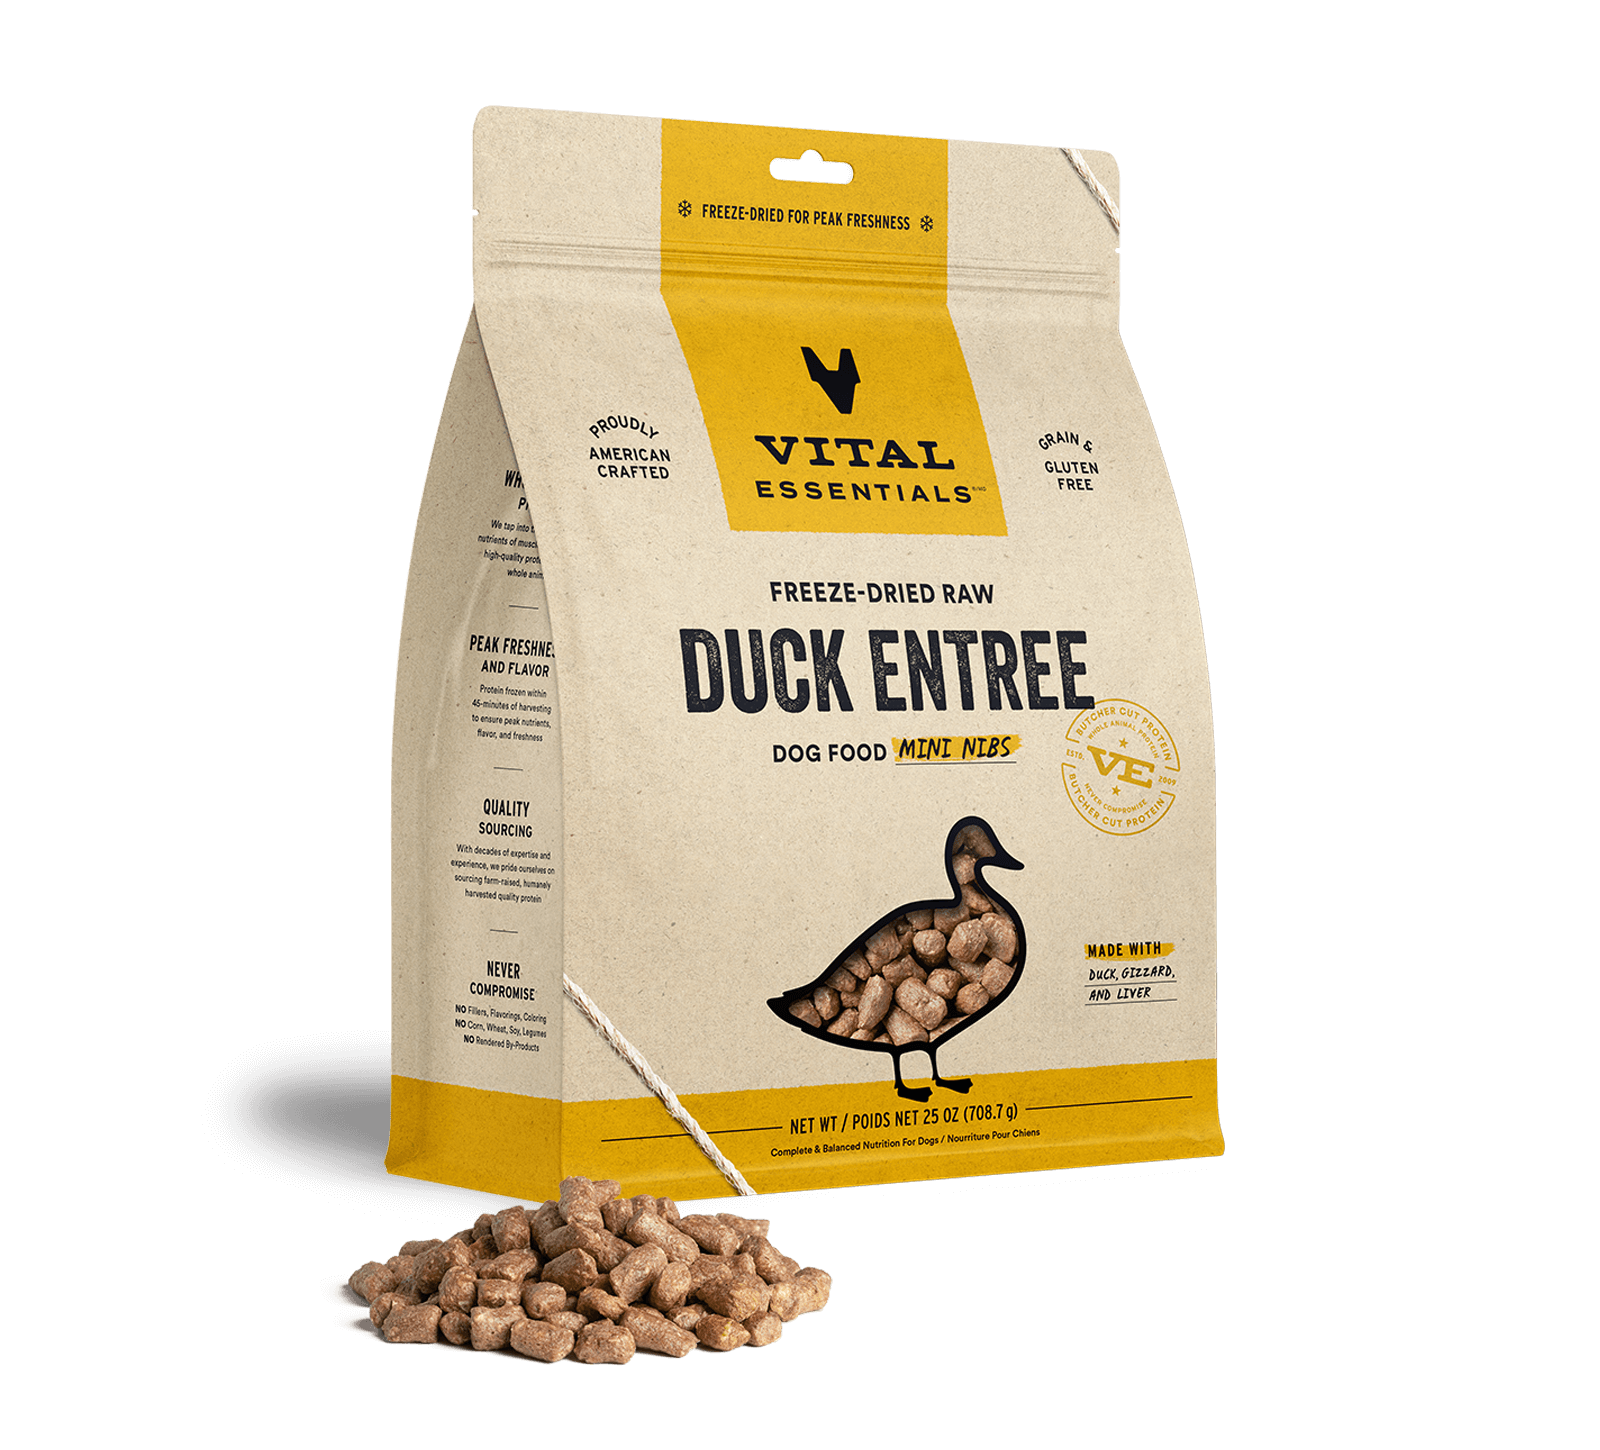 Vital Essentials Freeze-Dried Raw Duck Entree Dog Food Mini Nibs, 25 oz - Health/First Aid